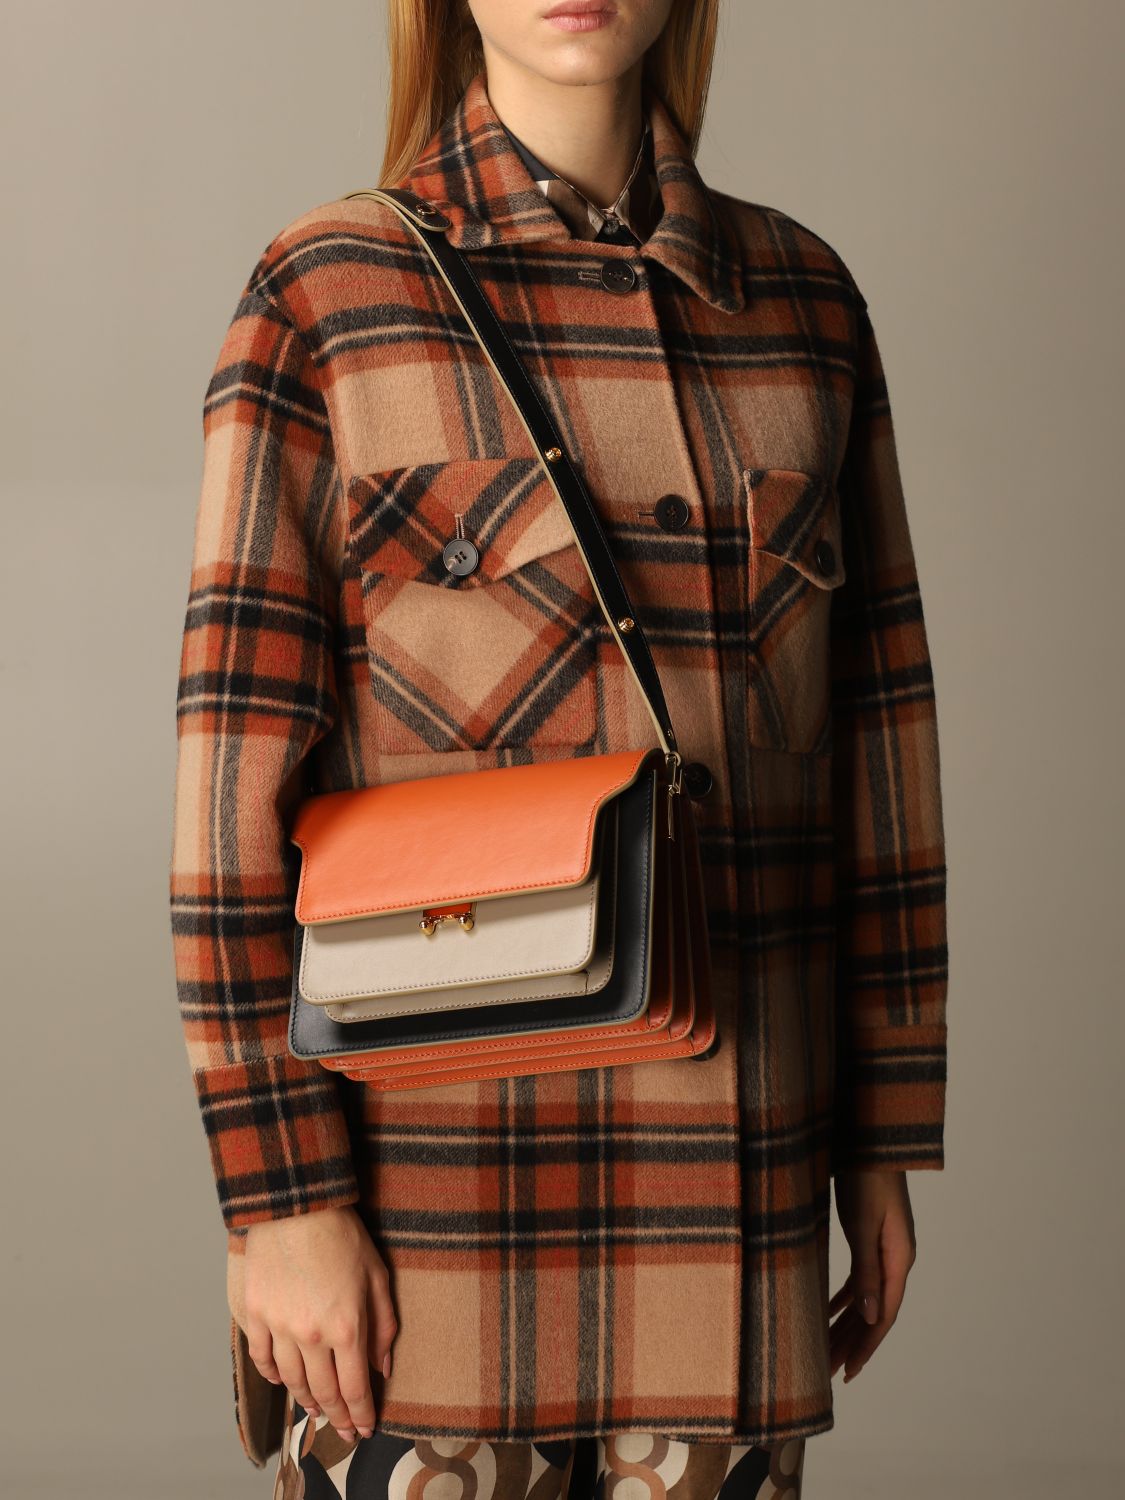 Brown Trunk medium colour-block leather shoulder bag, Marni